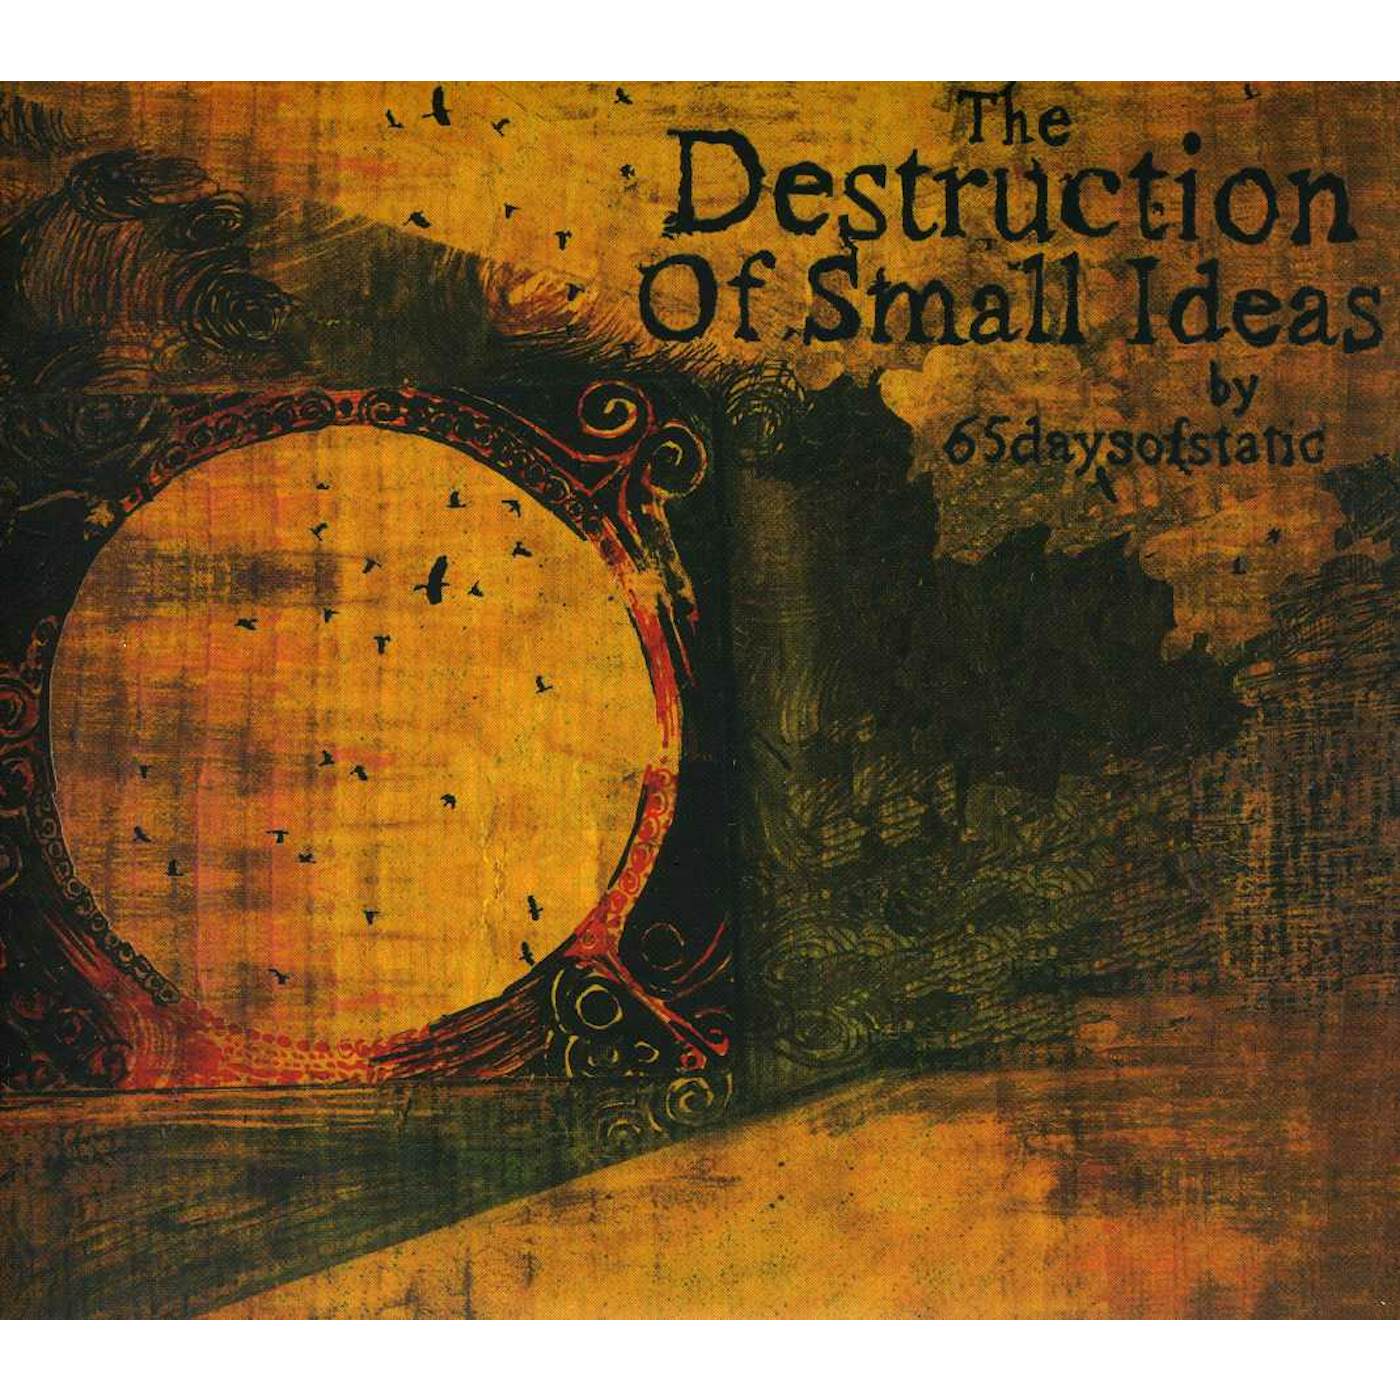 65daysofstatic DESTRUCTION OF SMALL IDEAS CD